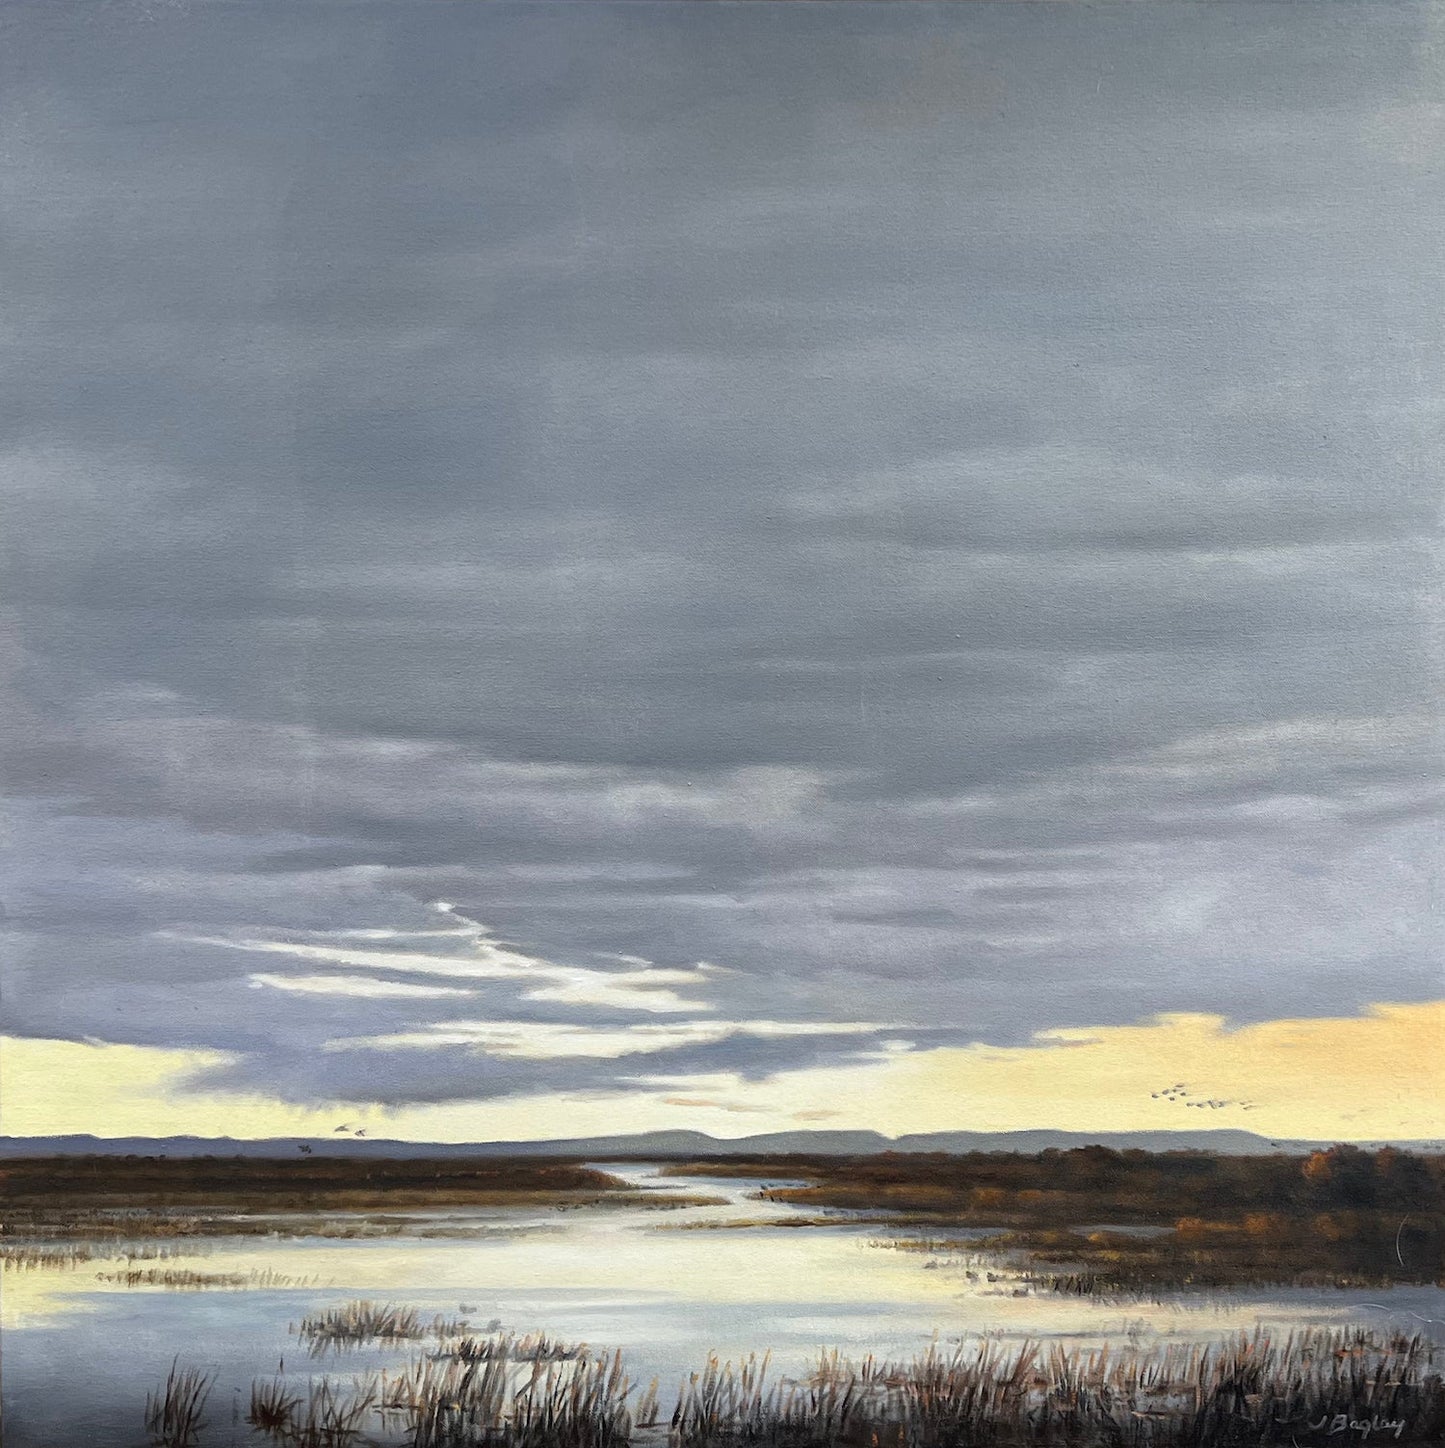 Summer Lake Dawn-Painting-Jim Bagley-Sorrel Sky Gallery